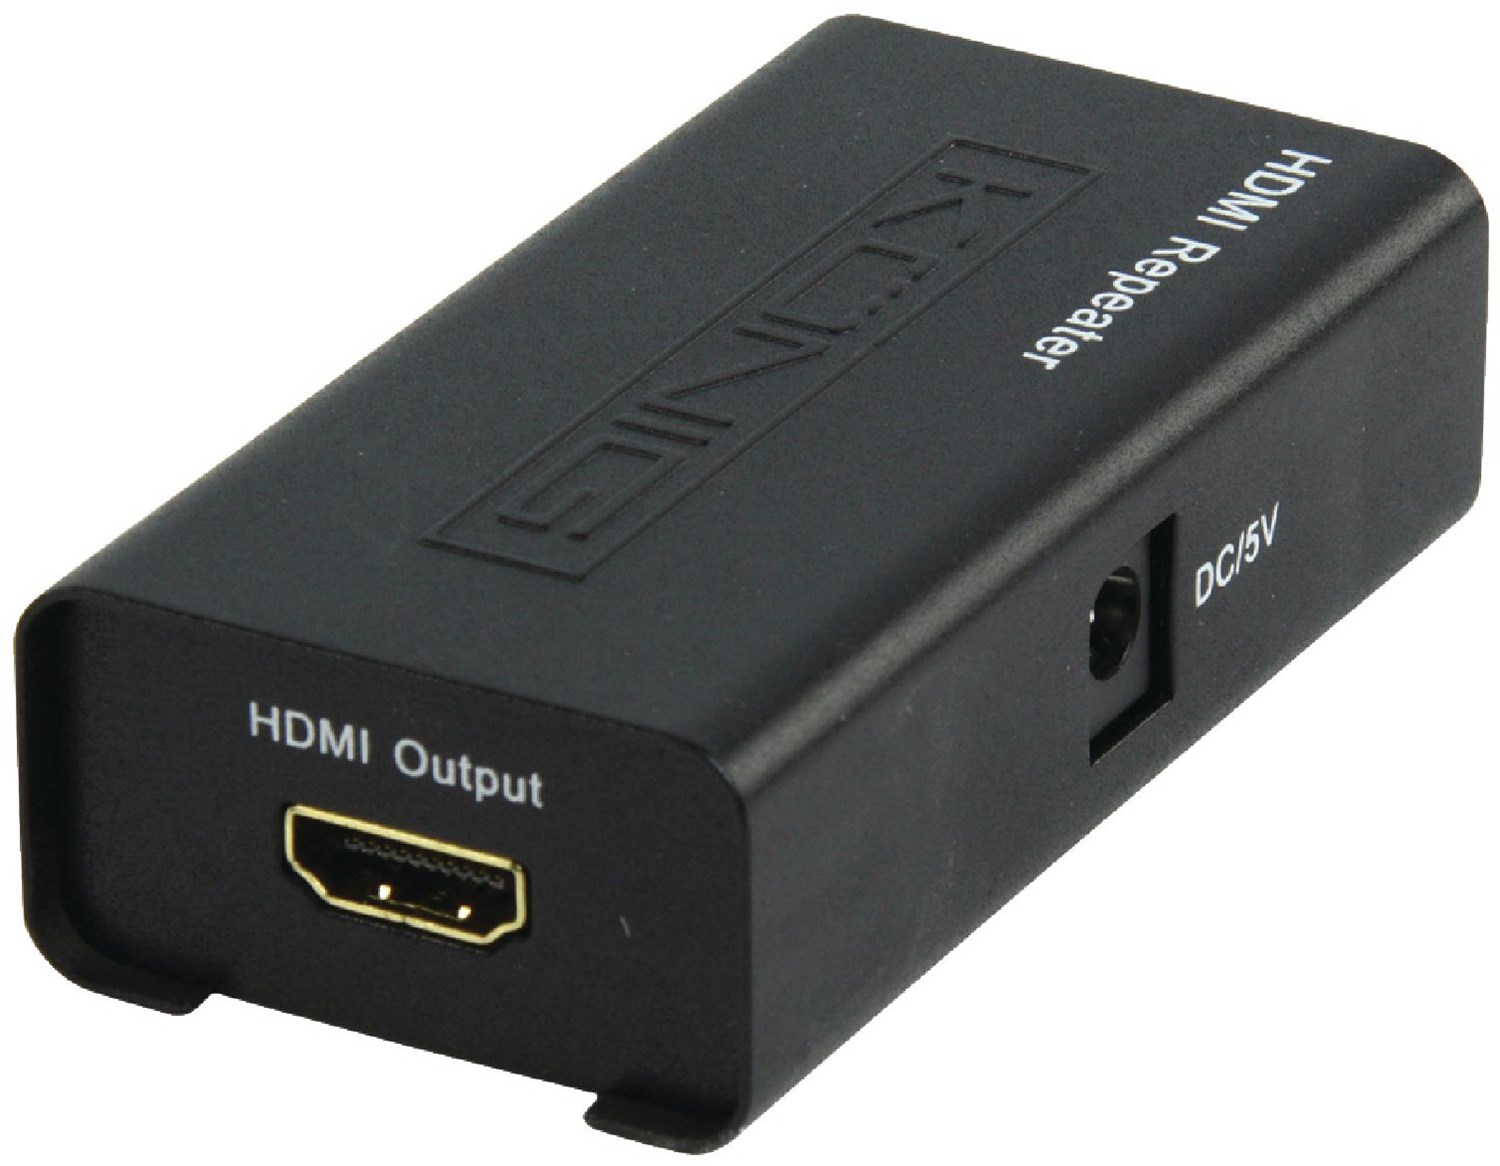 KN-HDMIREP10 HDMI Repeater